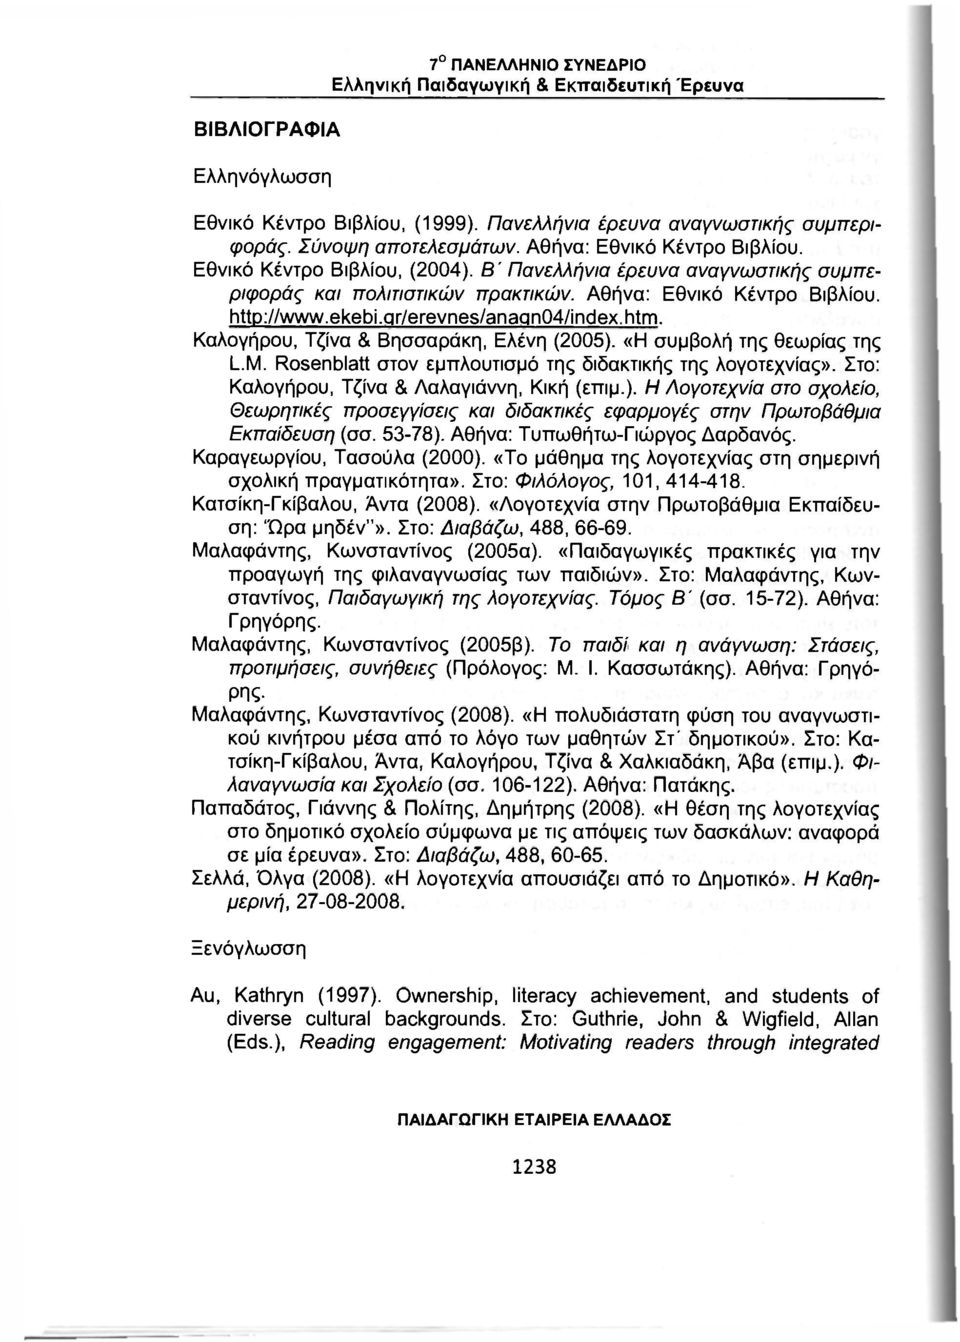 gr/erevnes/anagn04/index.htm. Καλογήρου, Τζίνα & Βησσαράκη, Ελένη (2005). «Η συμβολή της θεωρίας της L.M. Rosenblatt στον εμπλουτισμό της διδακτικής της λογοτεχνίας».